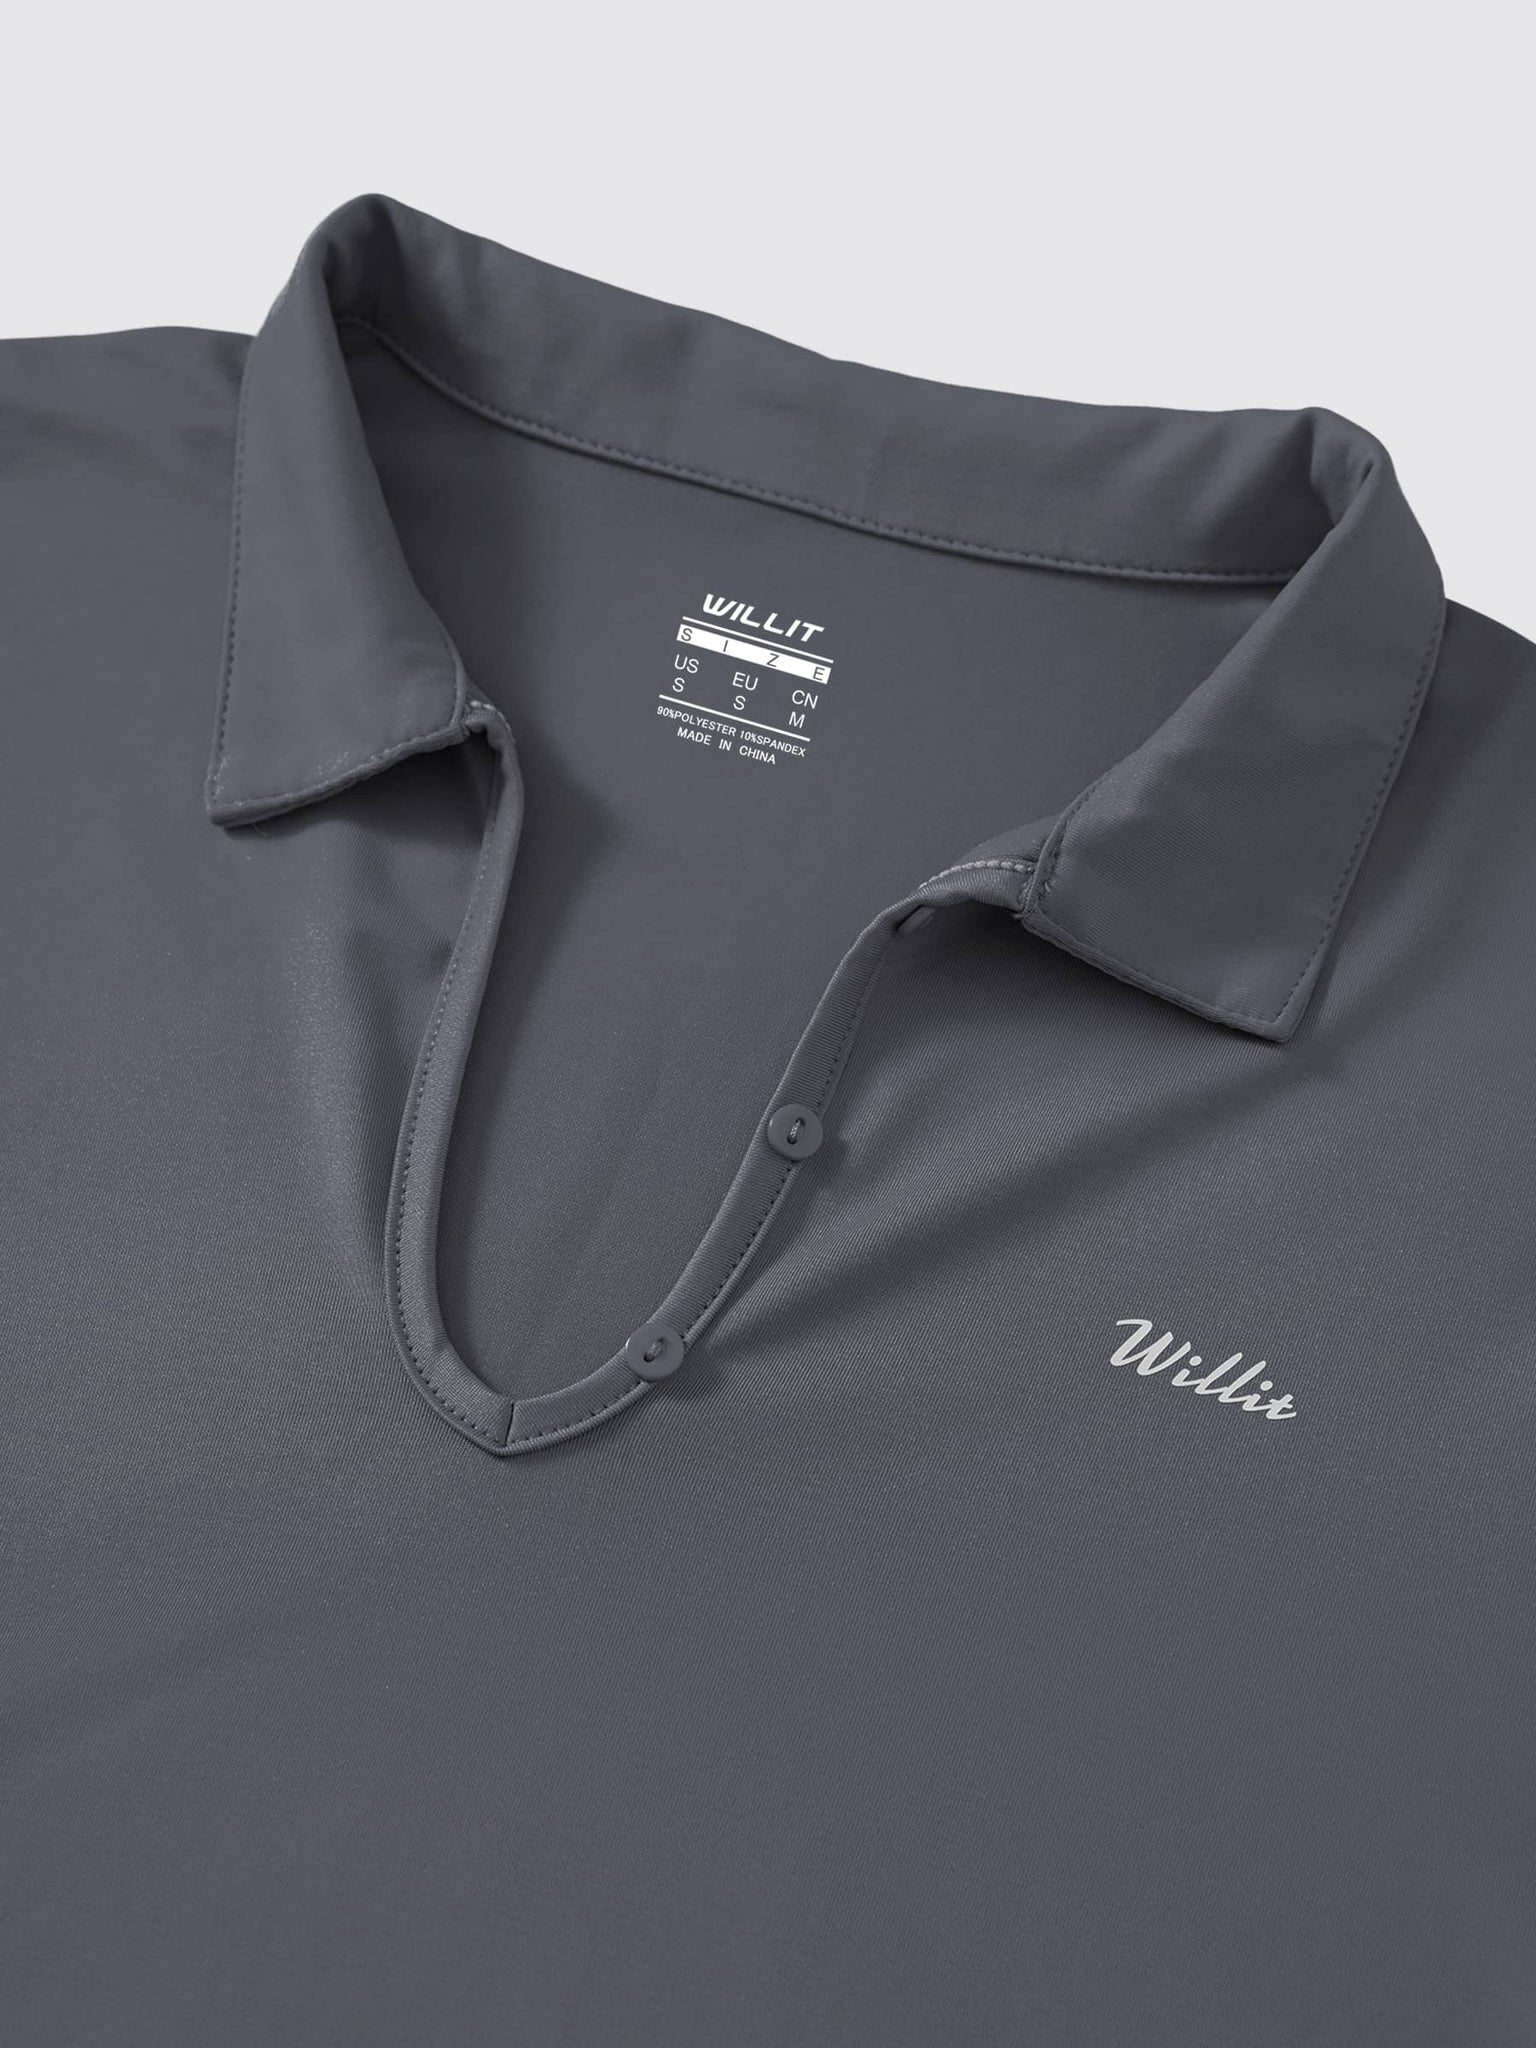 Willit Women's Golf Polo Short Sleeve Shirts_Gray4